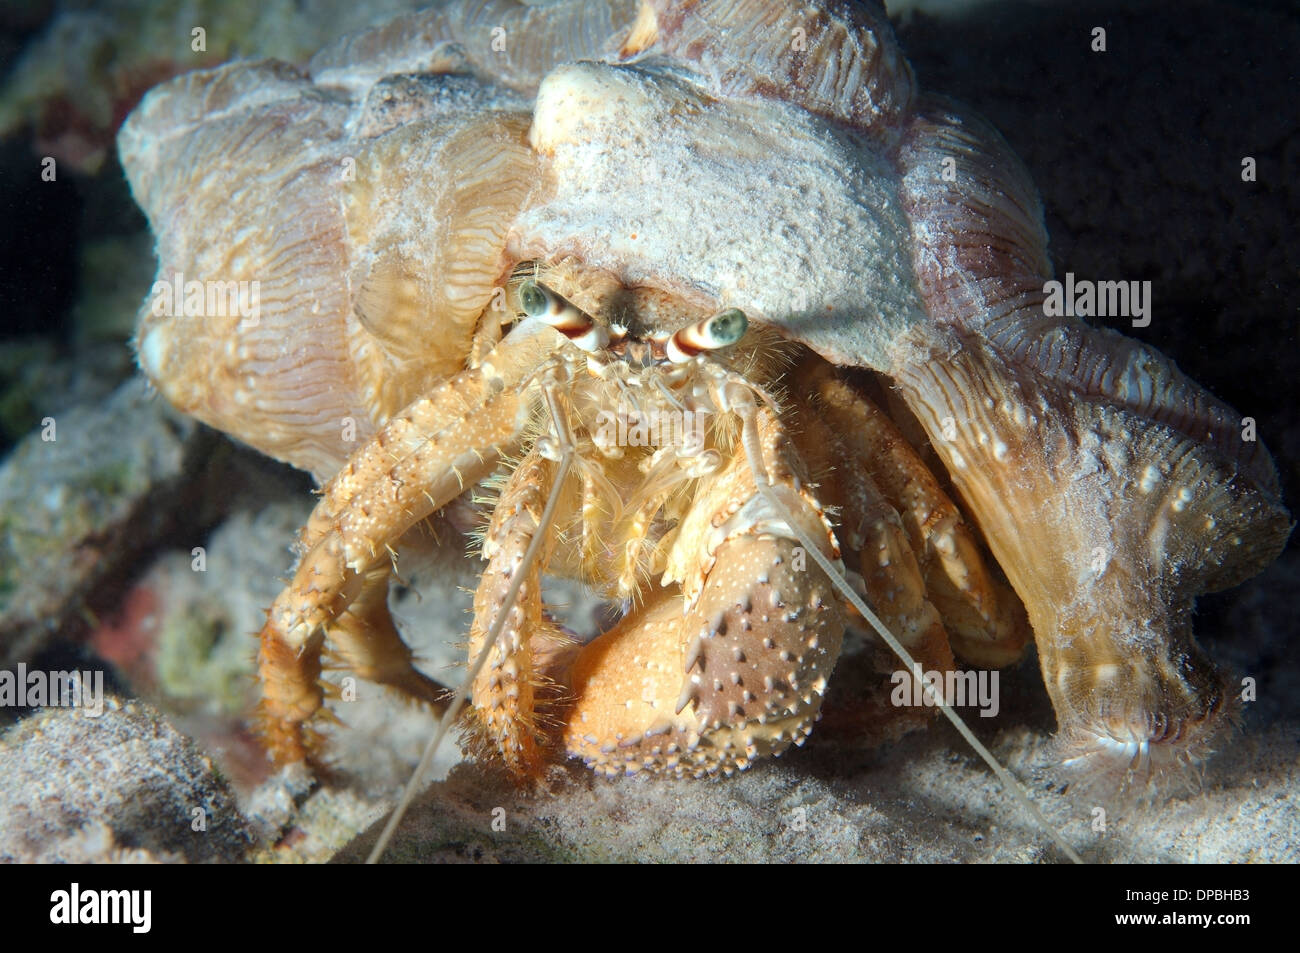 anemone hermit crab (Dardanus tinctor) Red sea, Egypt, Africa Stock Photo